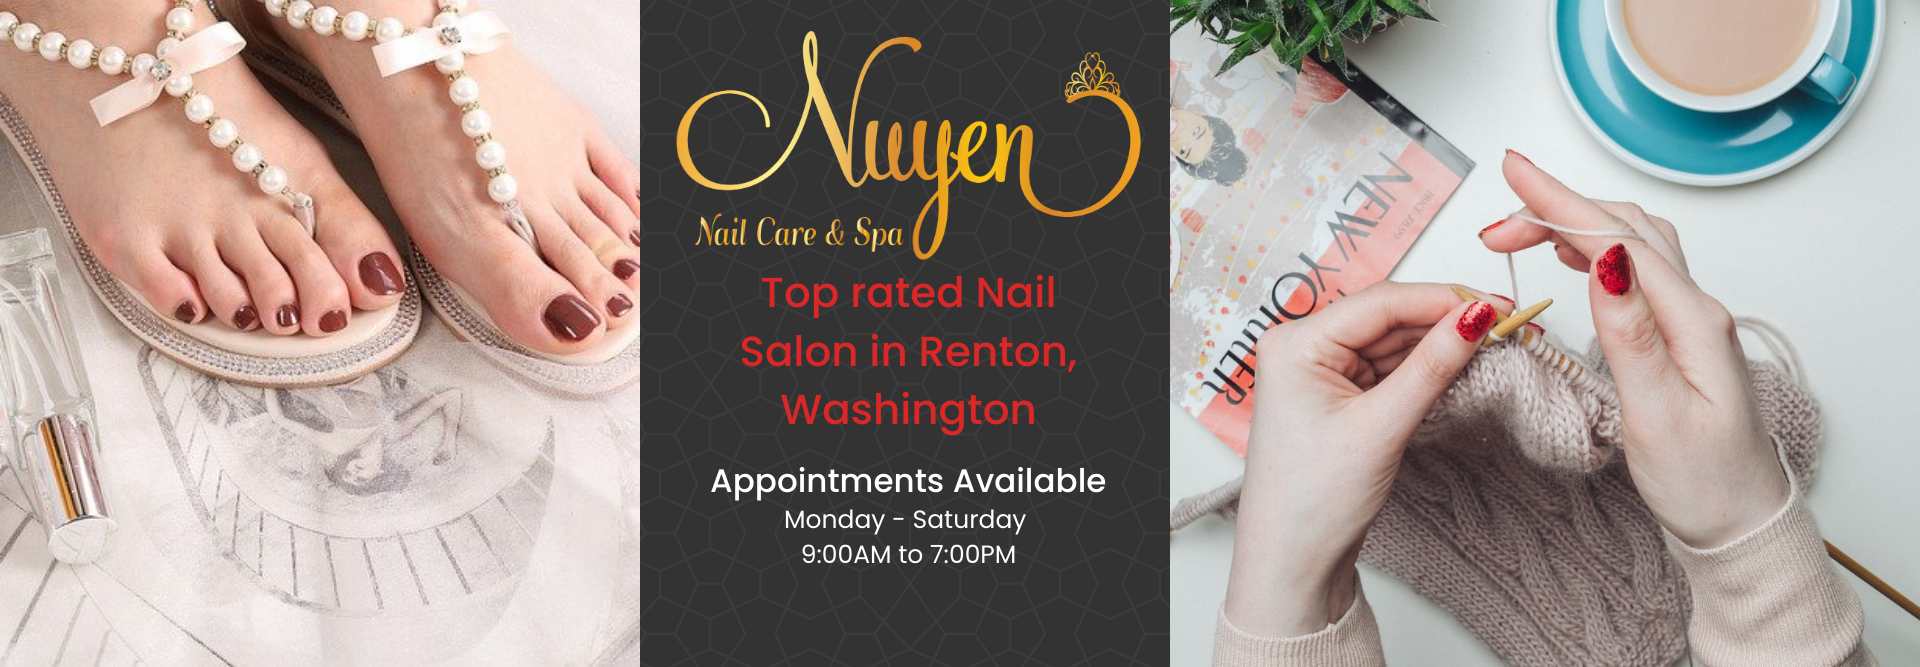 Nuyen Nail Care & Spa